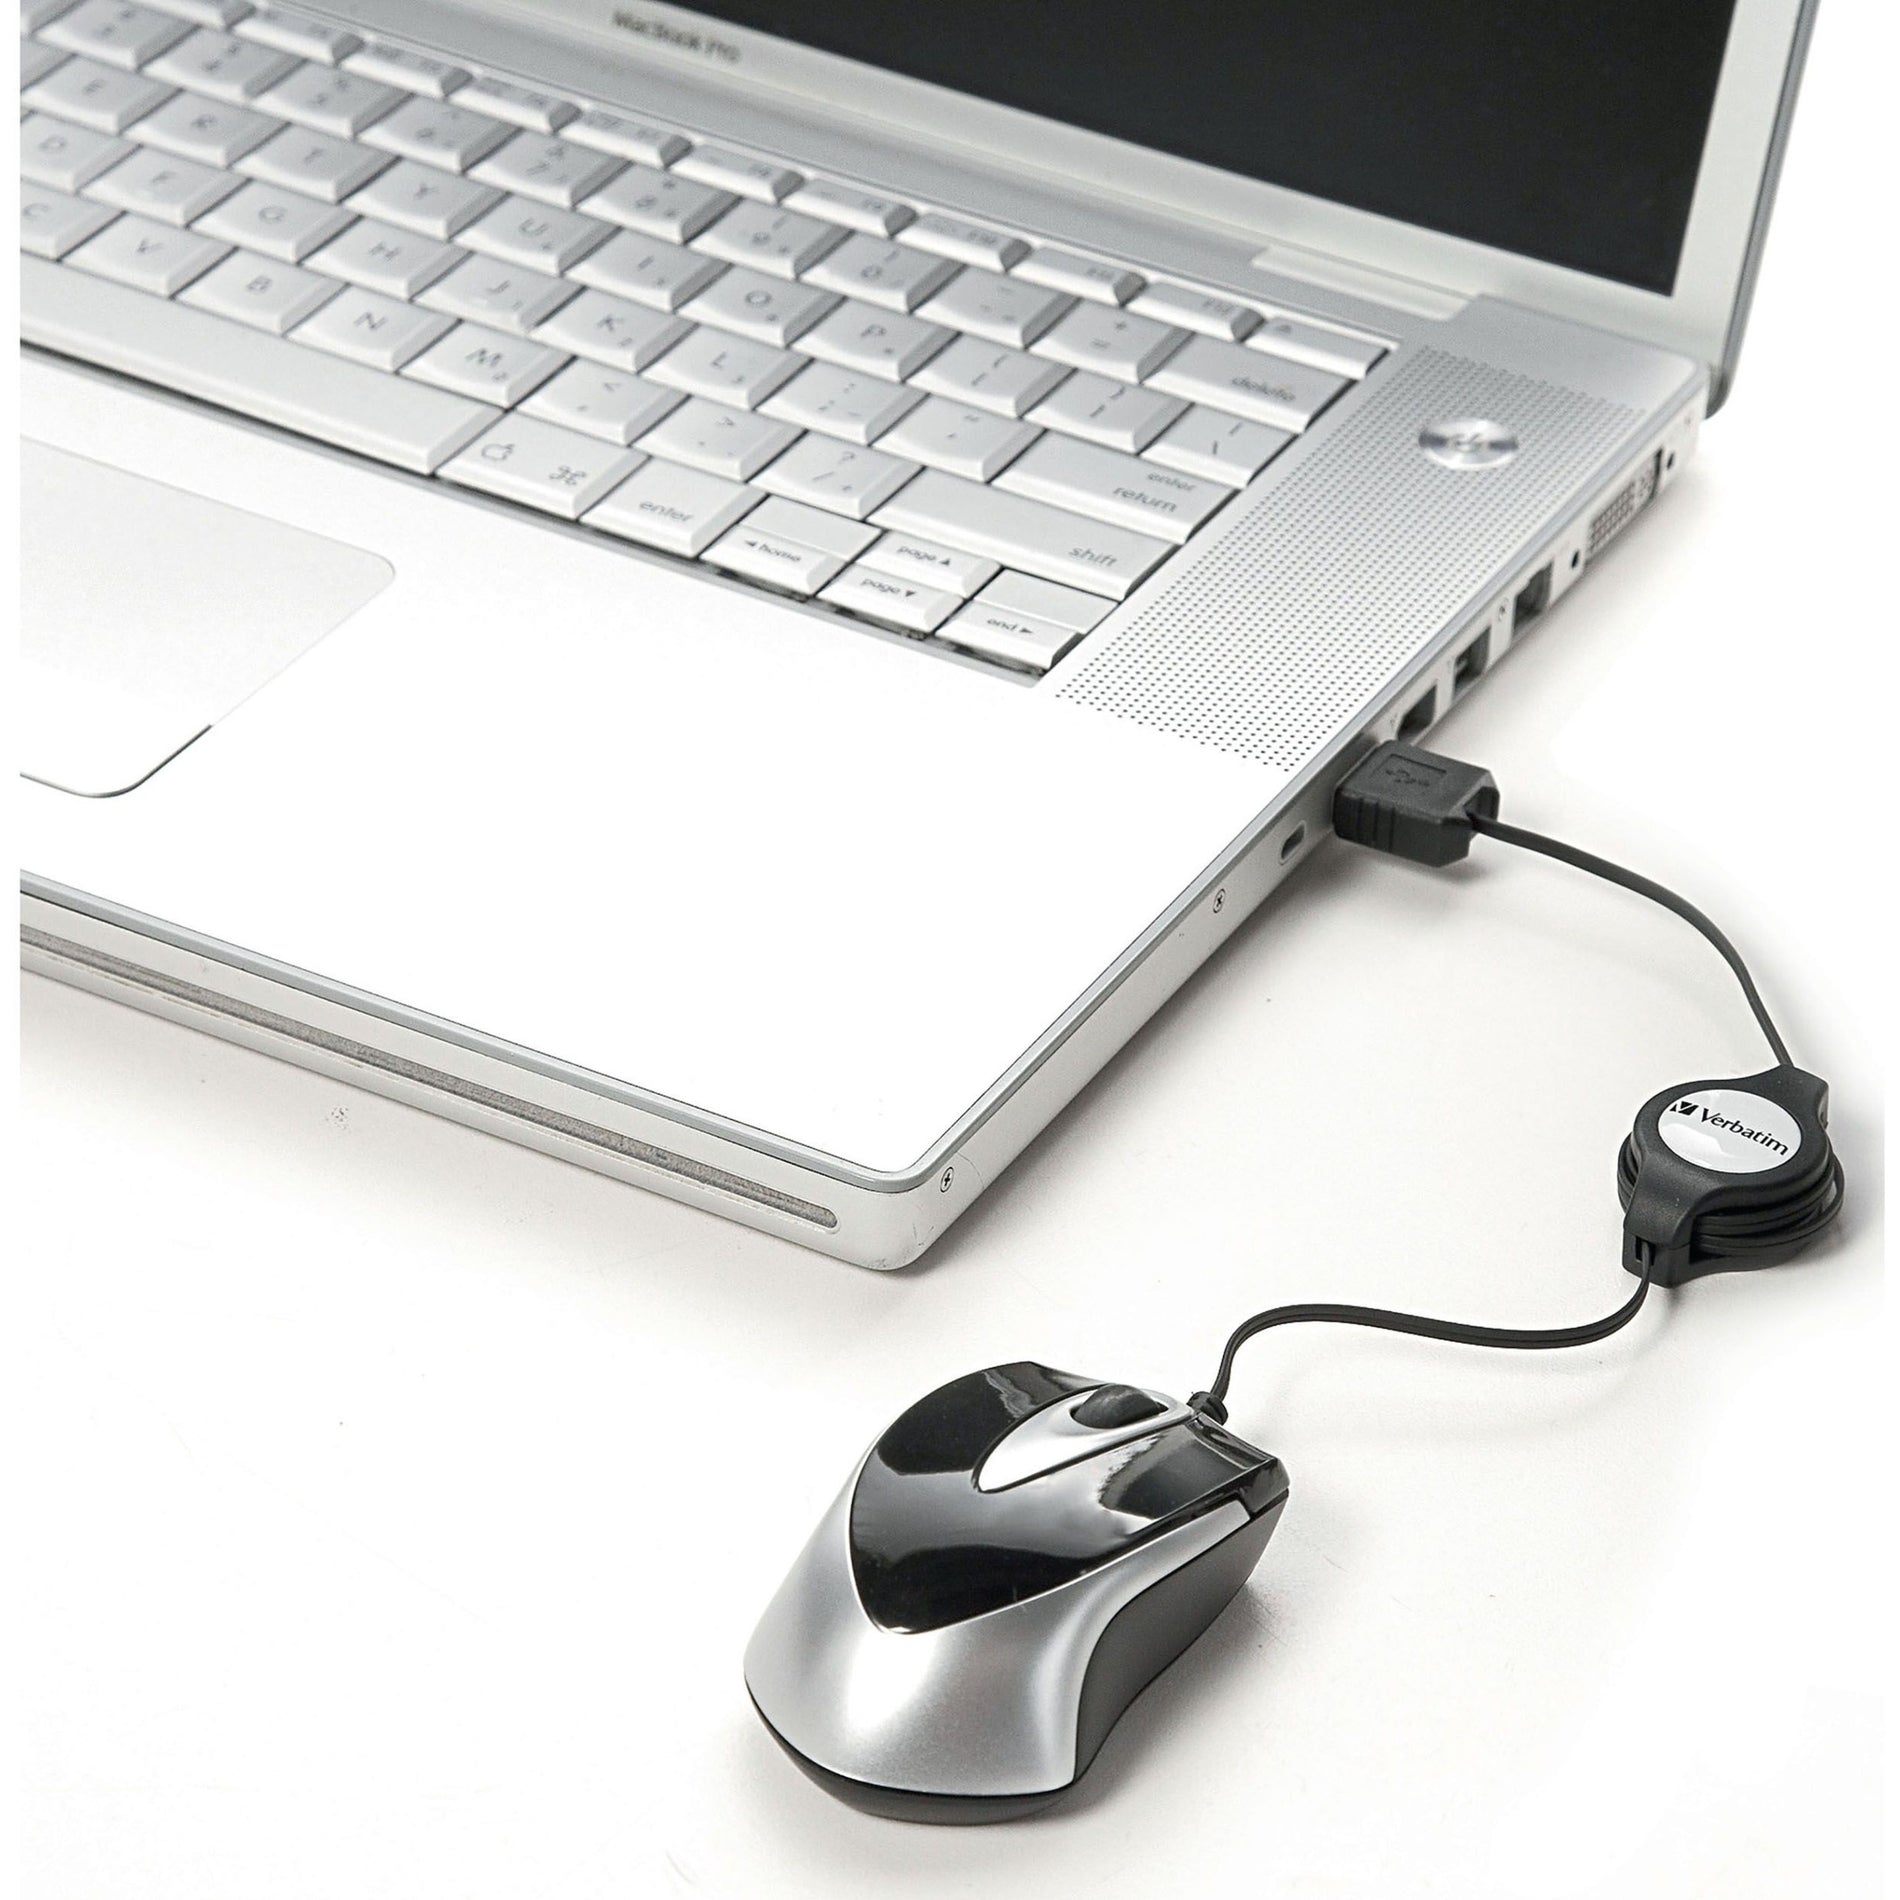 Verbatim 97256 Optical Travel Mouse, Black, 1000 dpi, USB